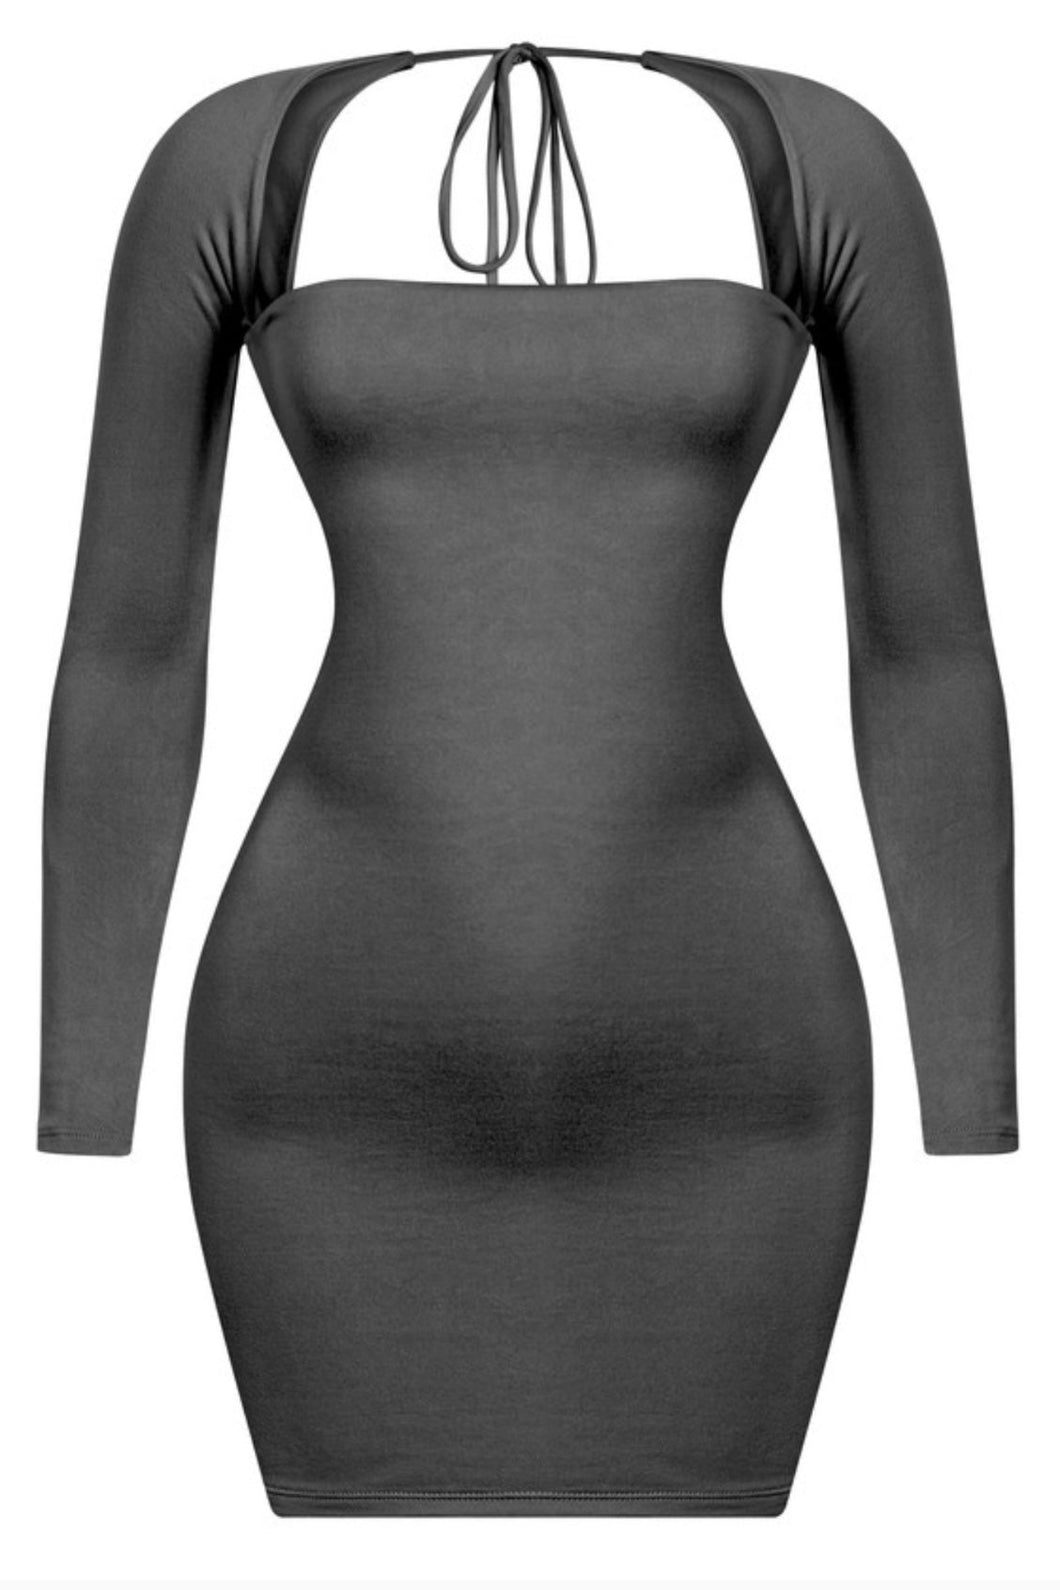 Harlem Long Sleeve Mini Dress (Black)